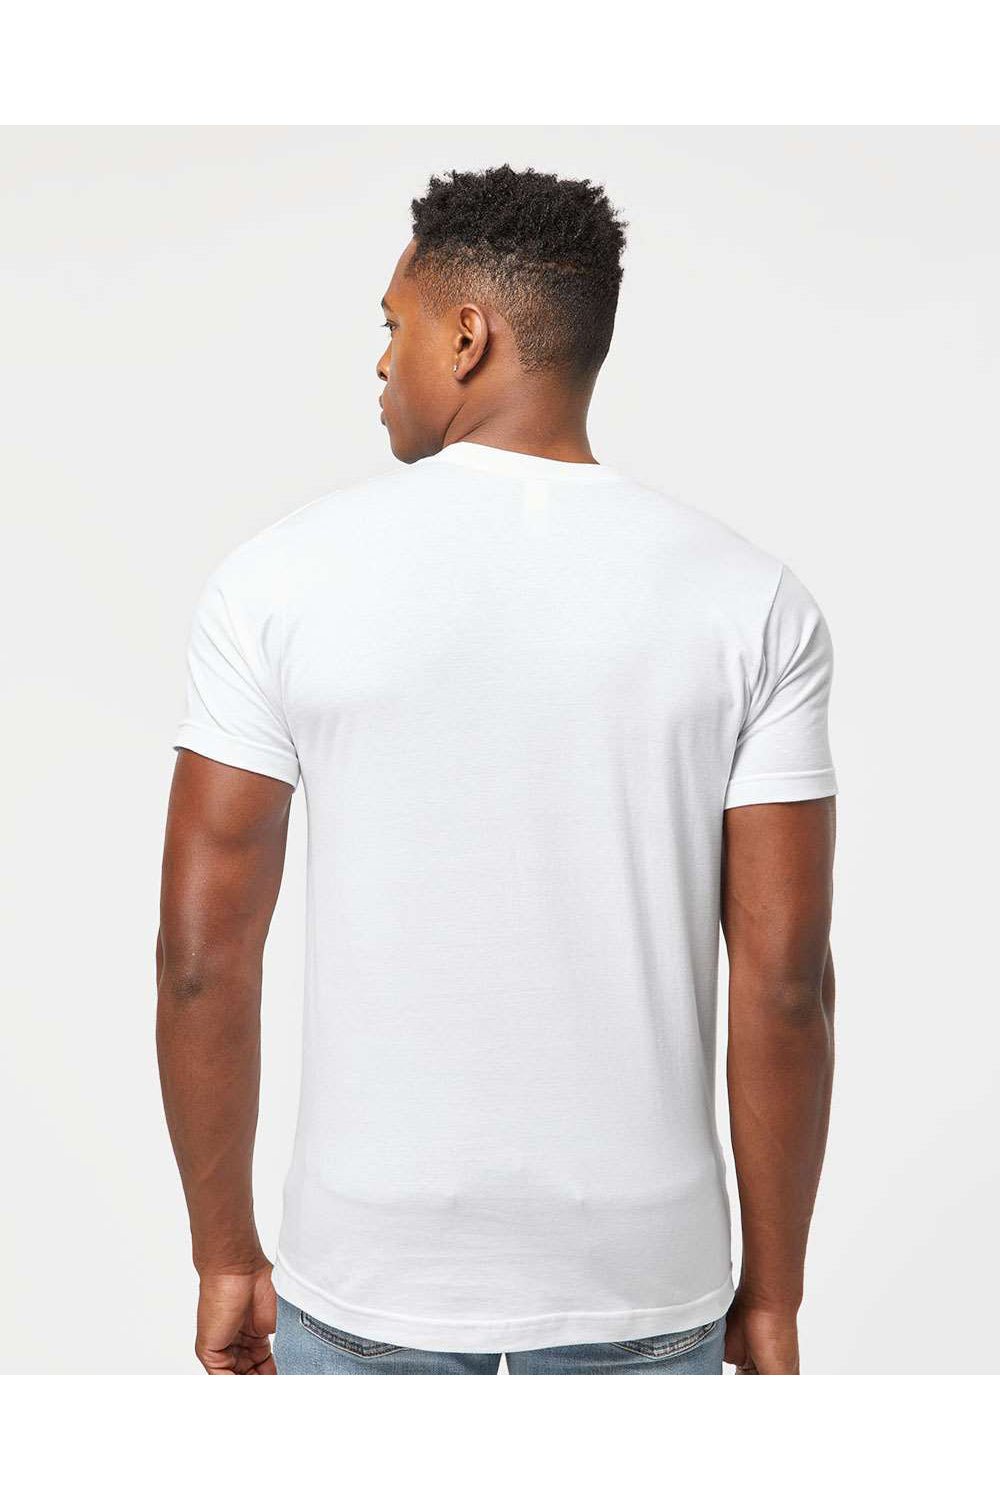 Tultex 202 Mens Fine Jersey Short Sleeve Crewneck T-Shirt White Model Back